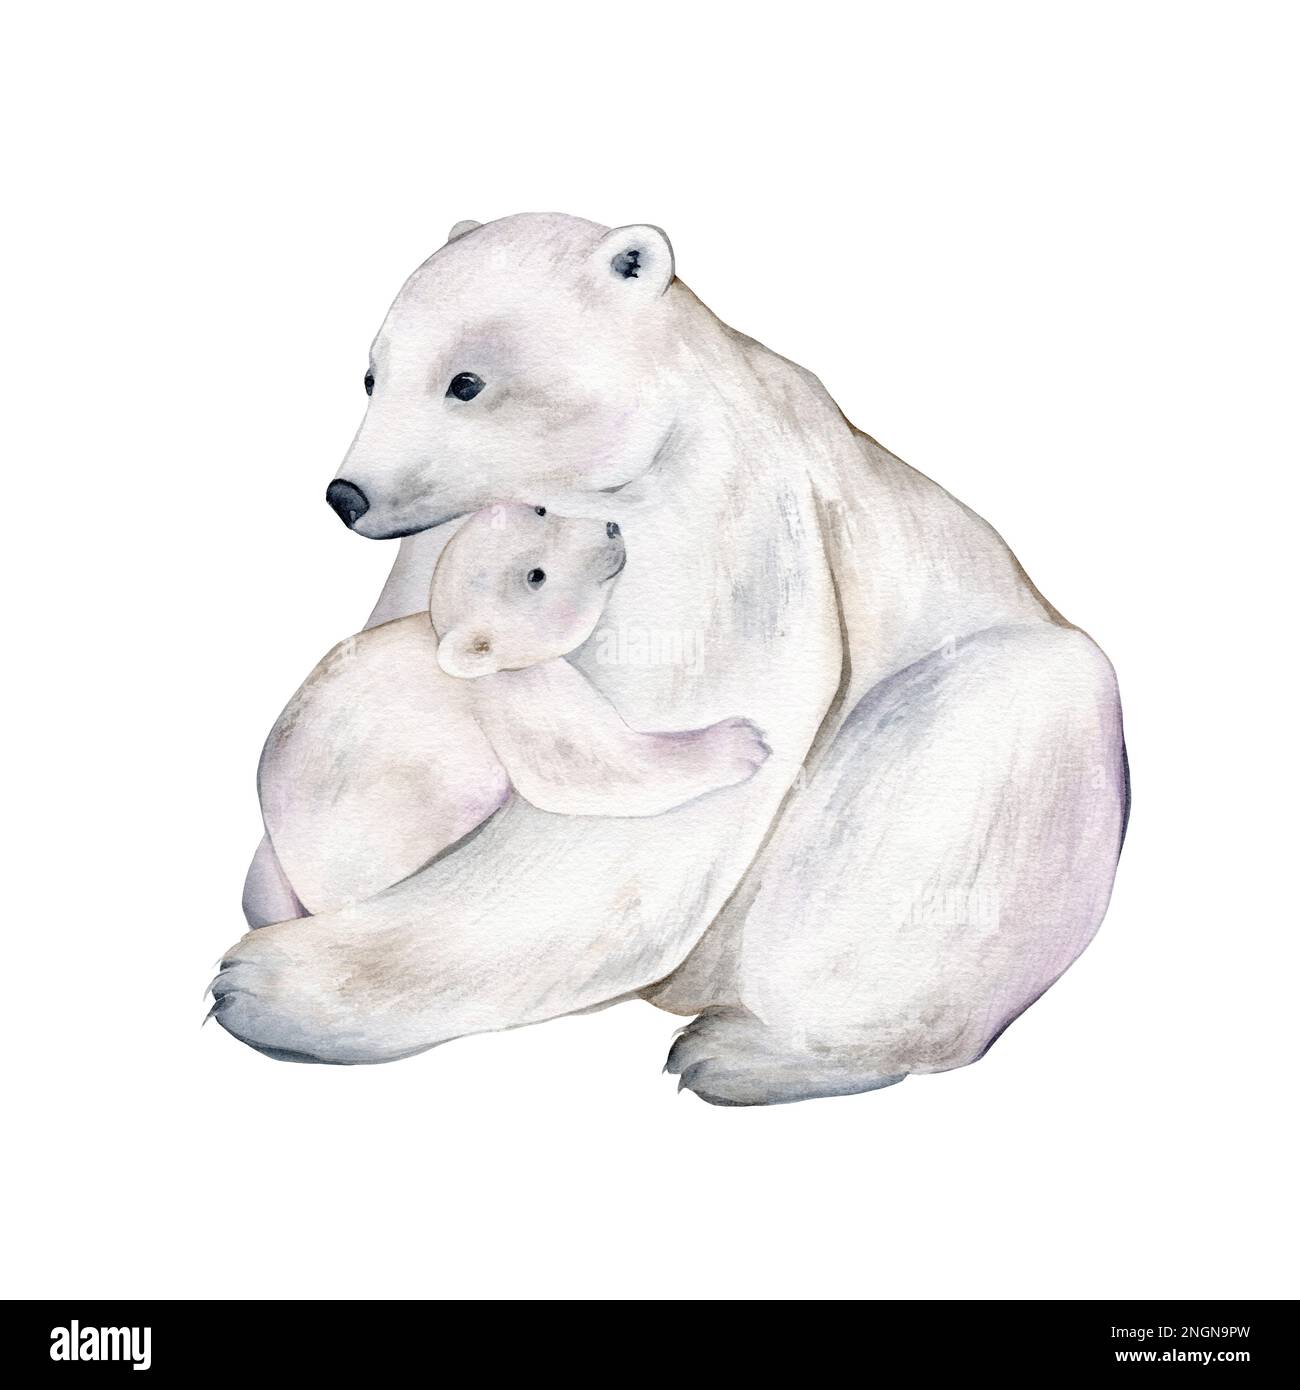 How to Draw a Polar Bear step by step – Easy Animals 2 Draw